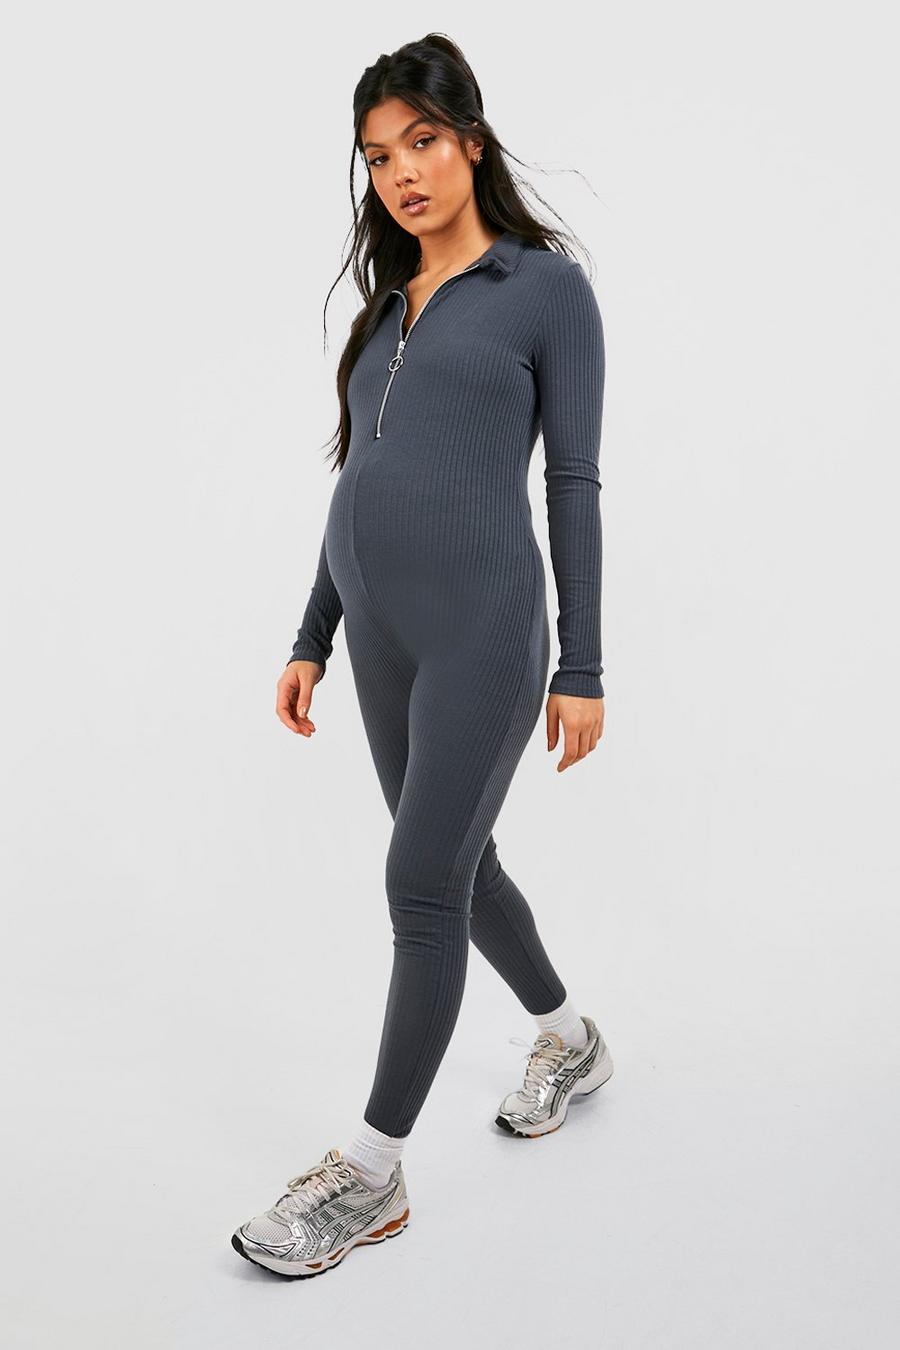 Charcoal grey Maternity Soft Rib Zip Unitard Jumpsuit